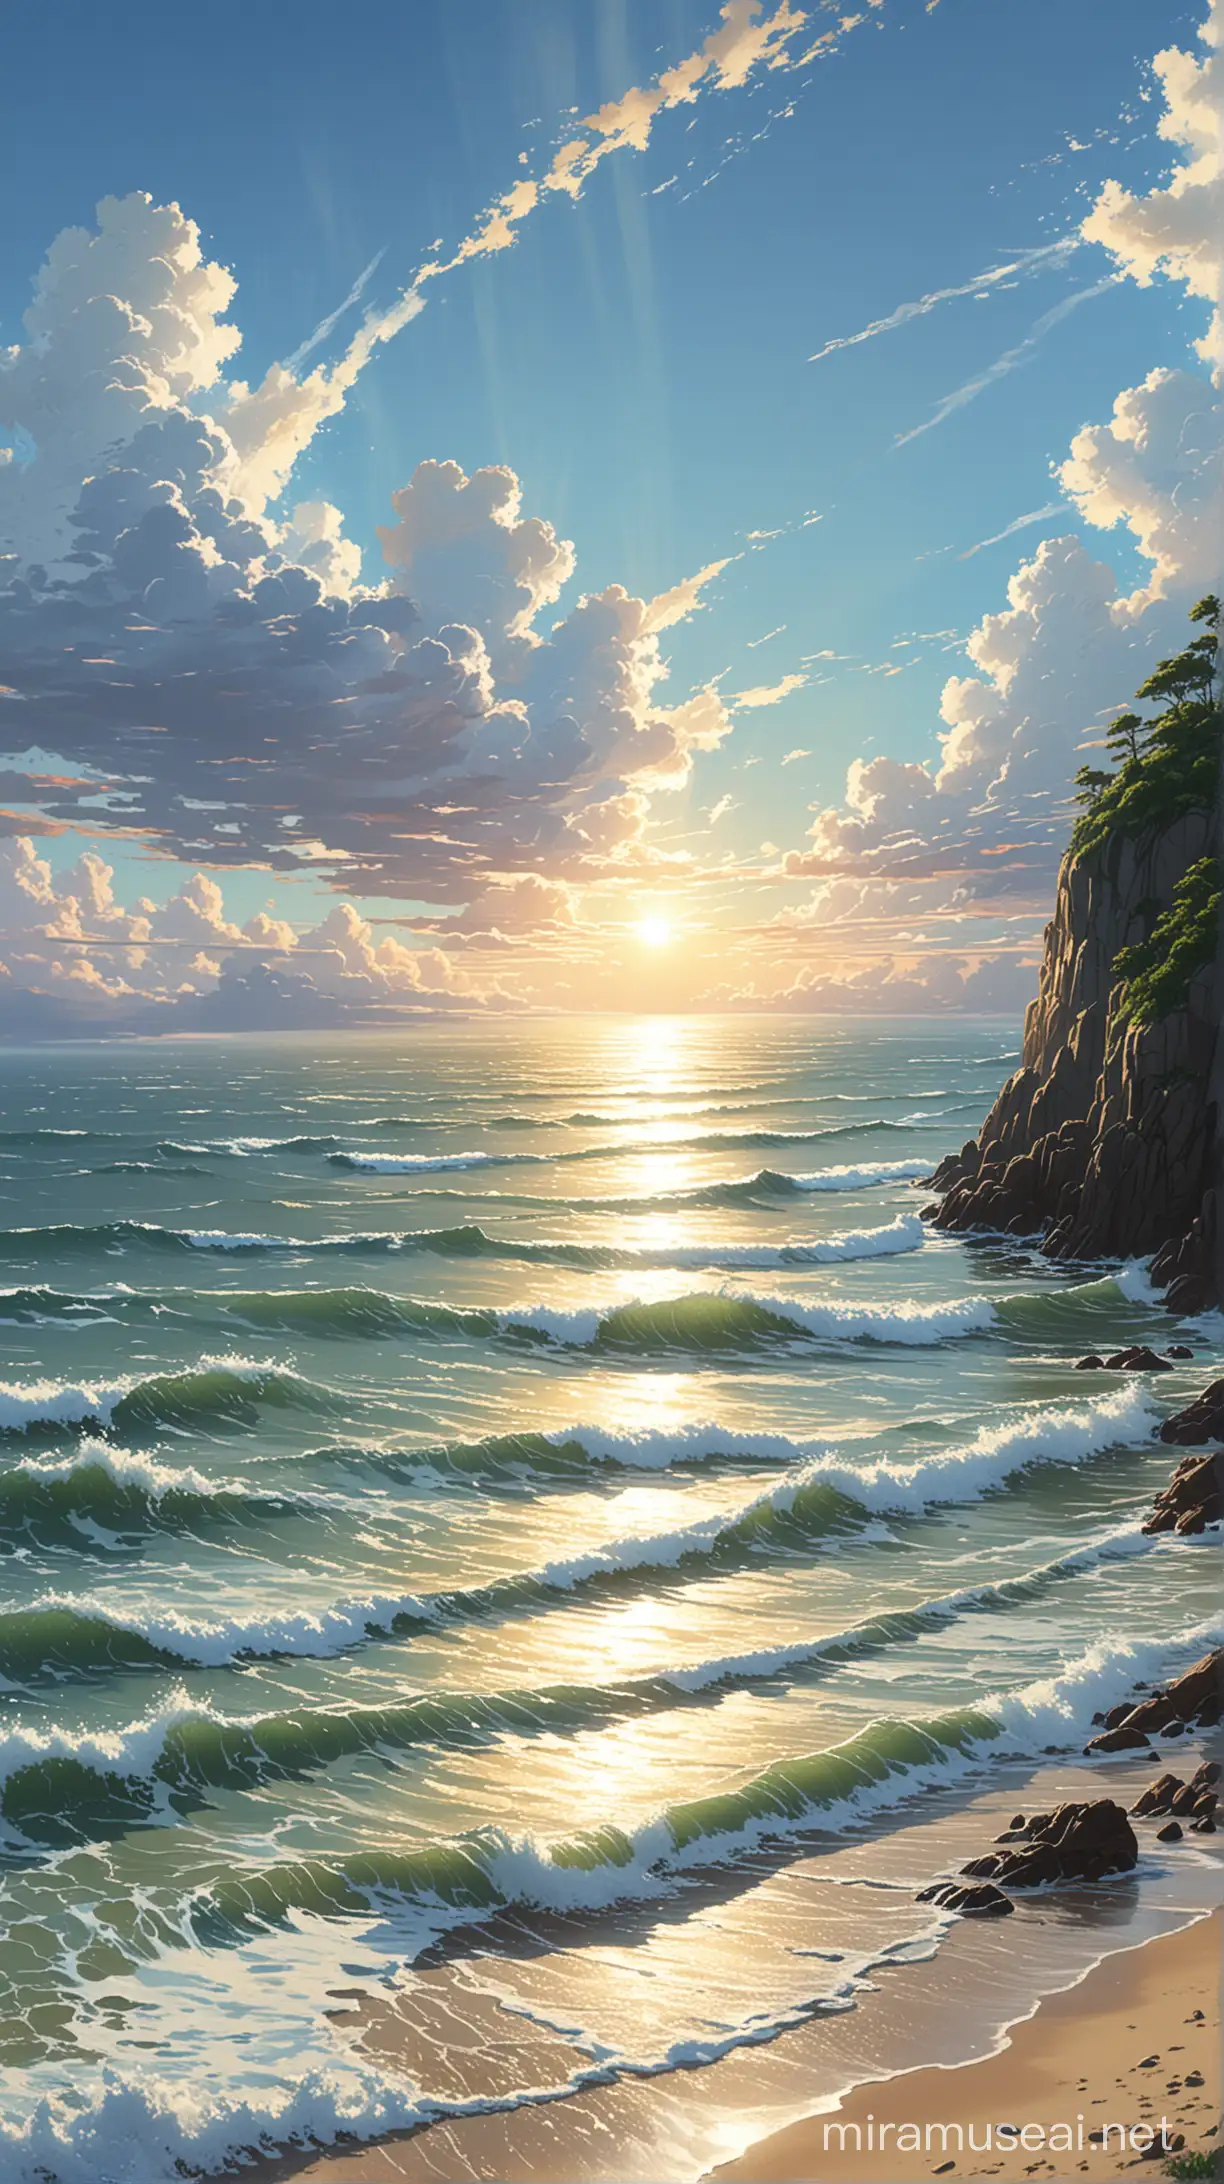 Oceanfront Daytime Scene with Sunlight and Waves Makoto Shinkai Style Illustration